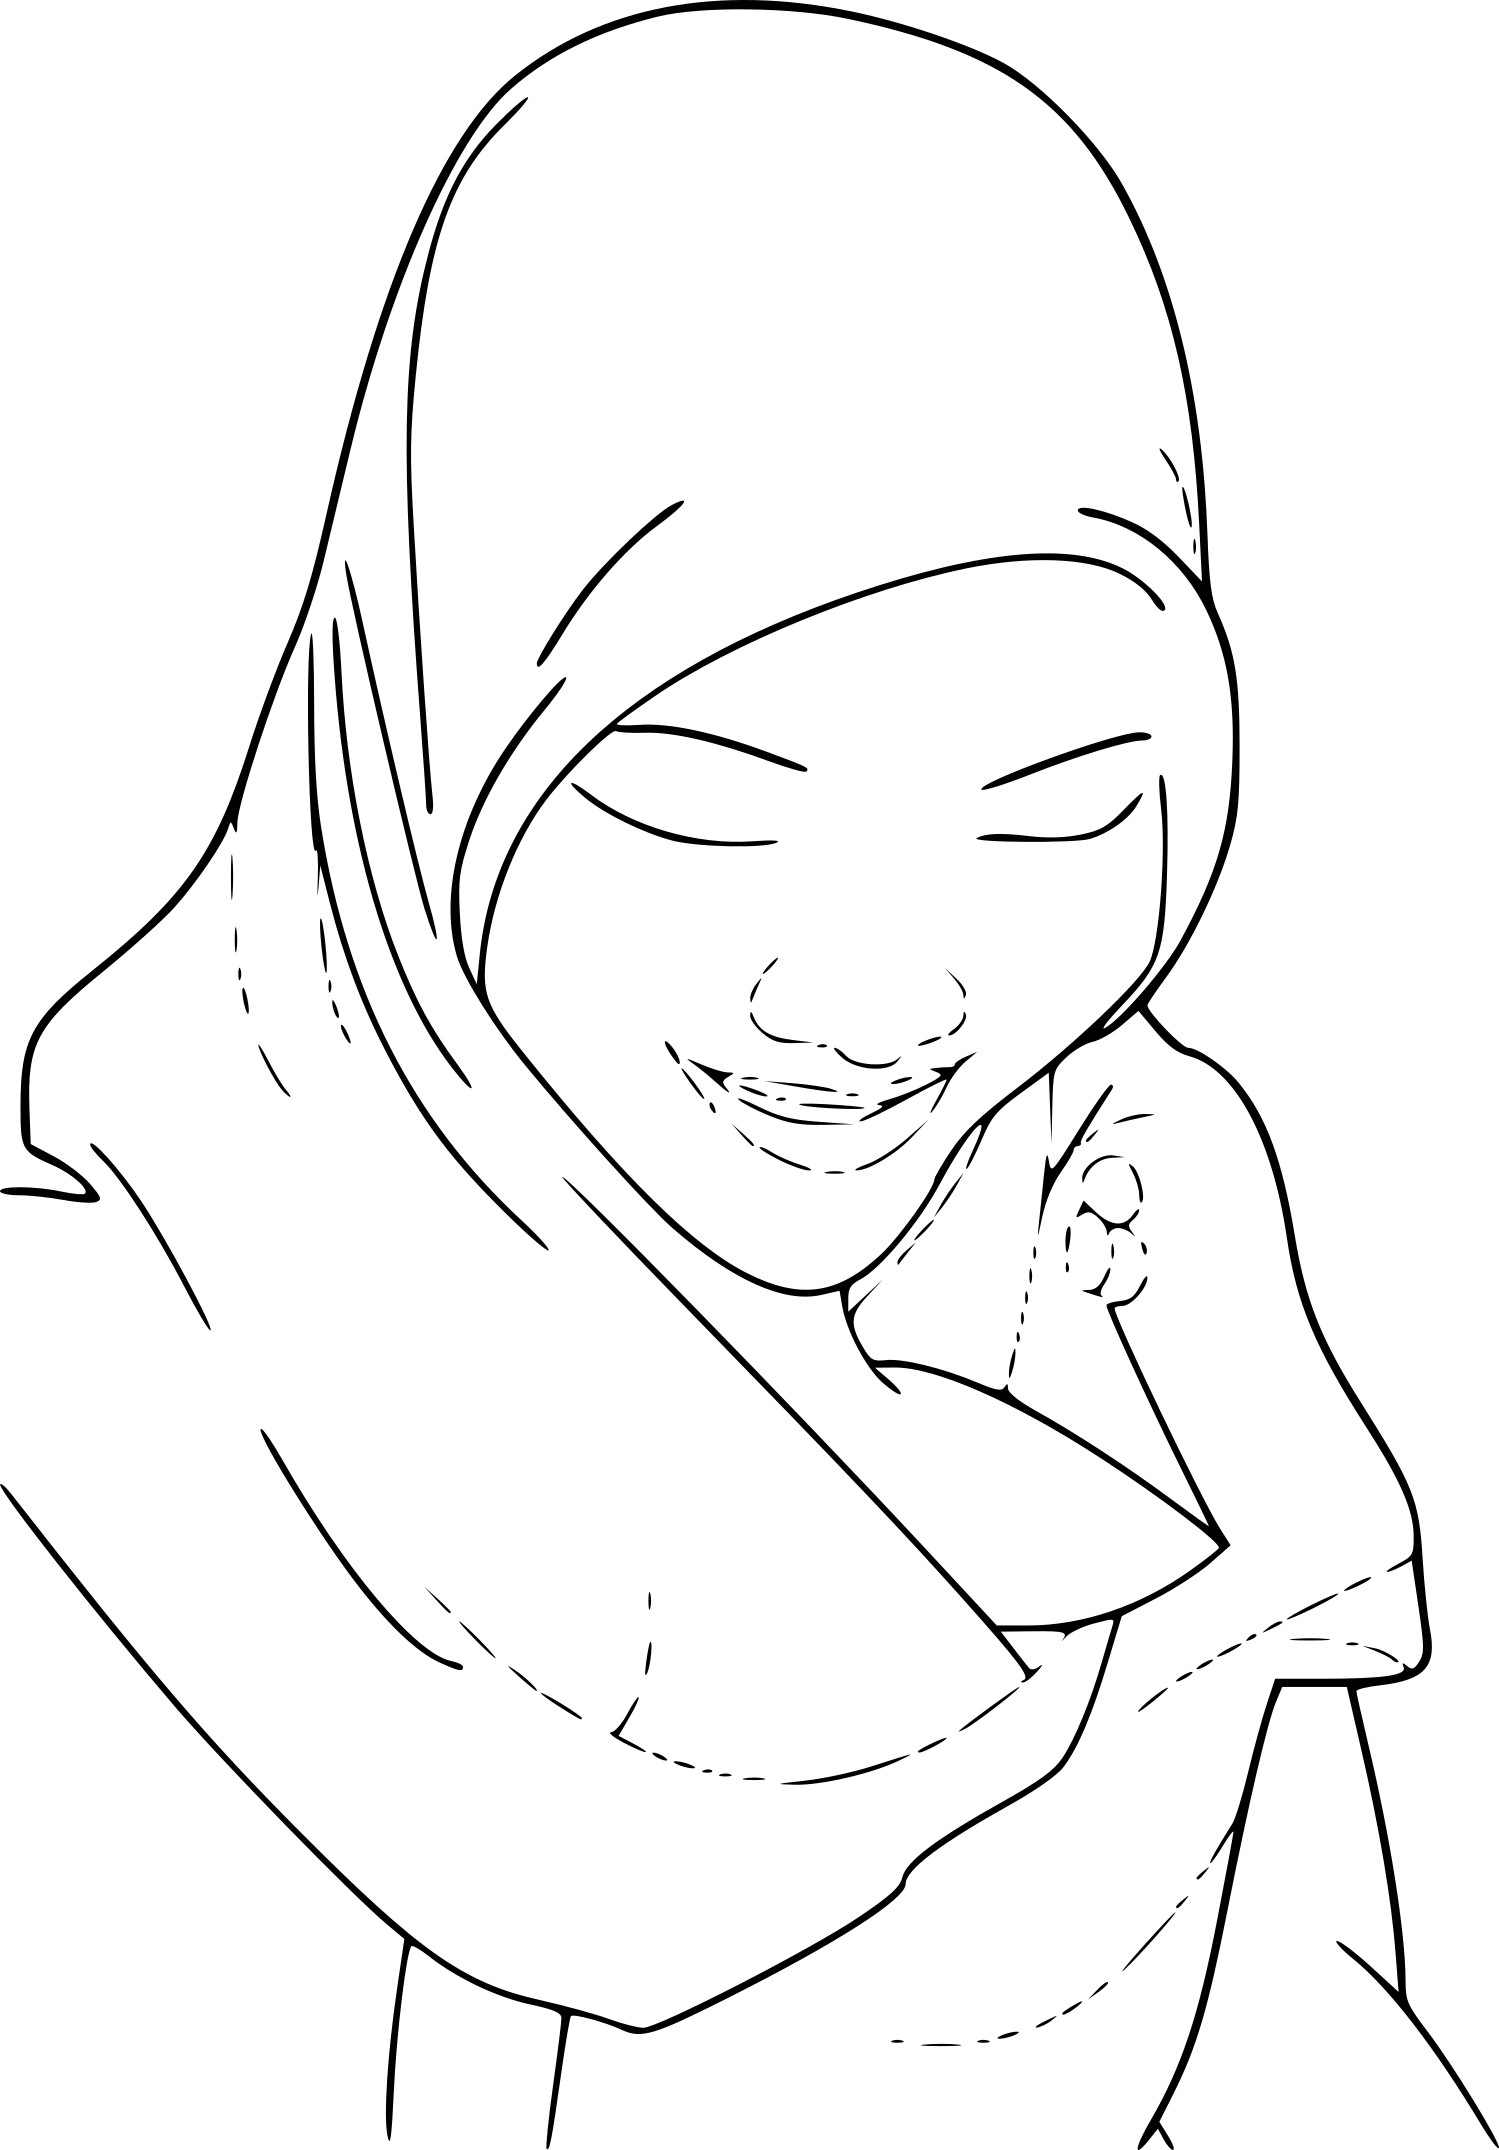 Hijab coloring page